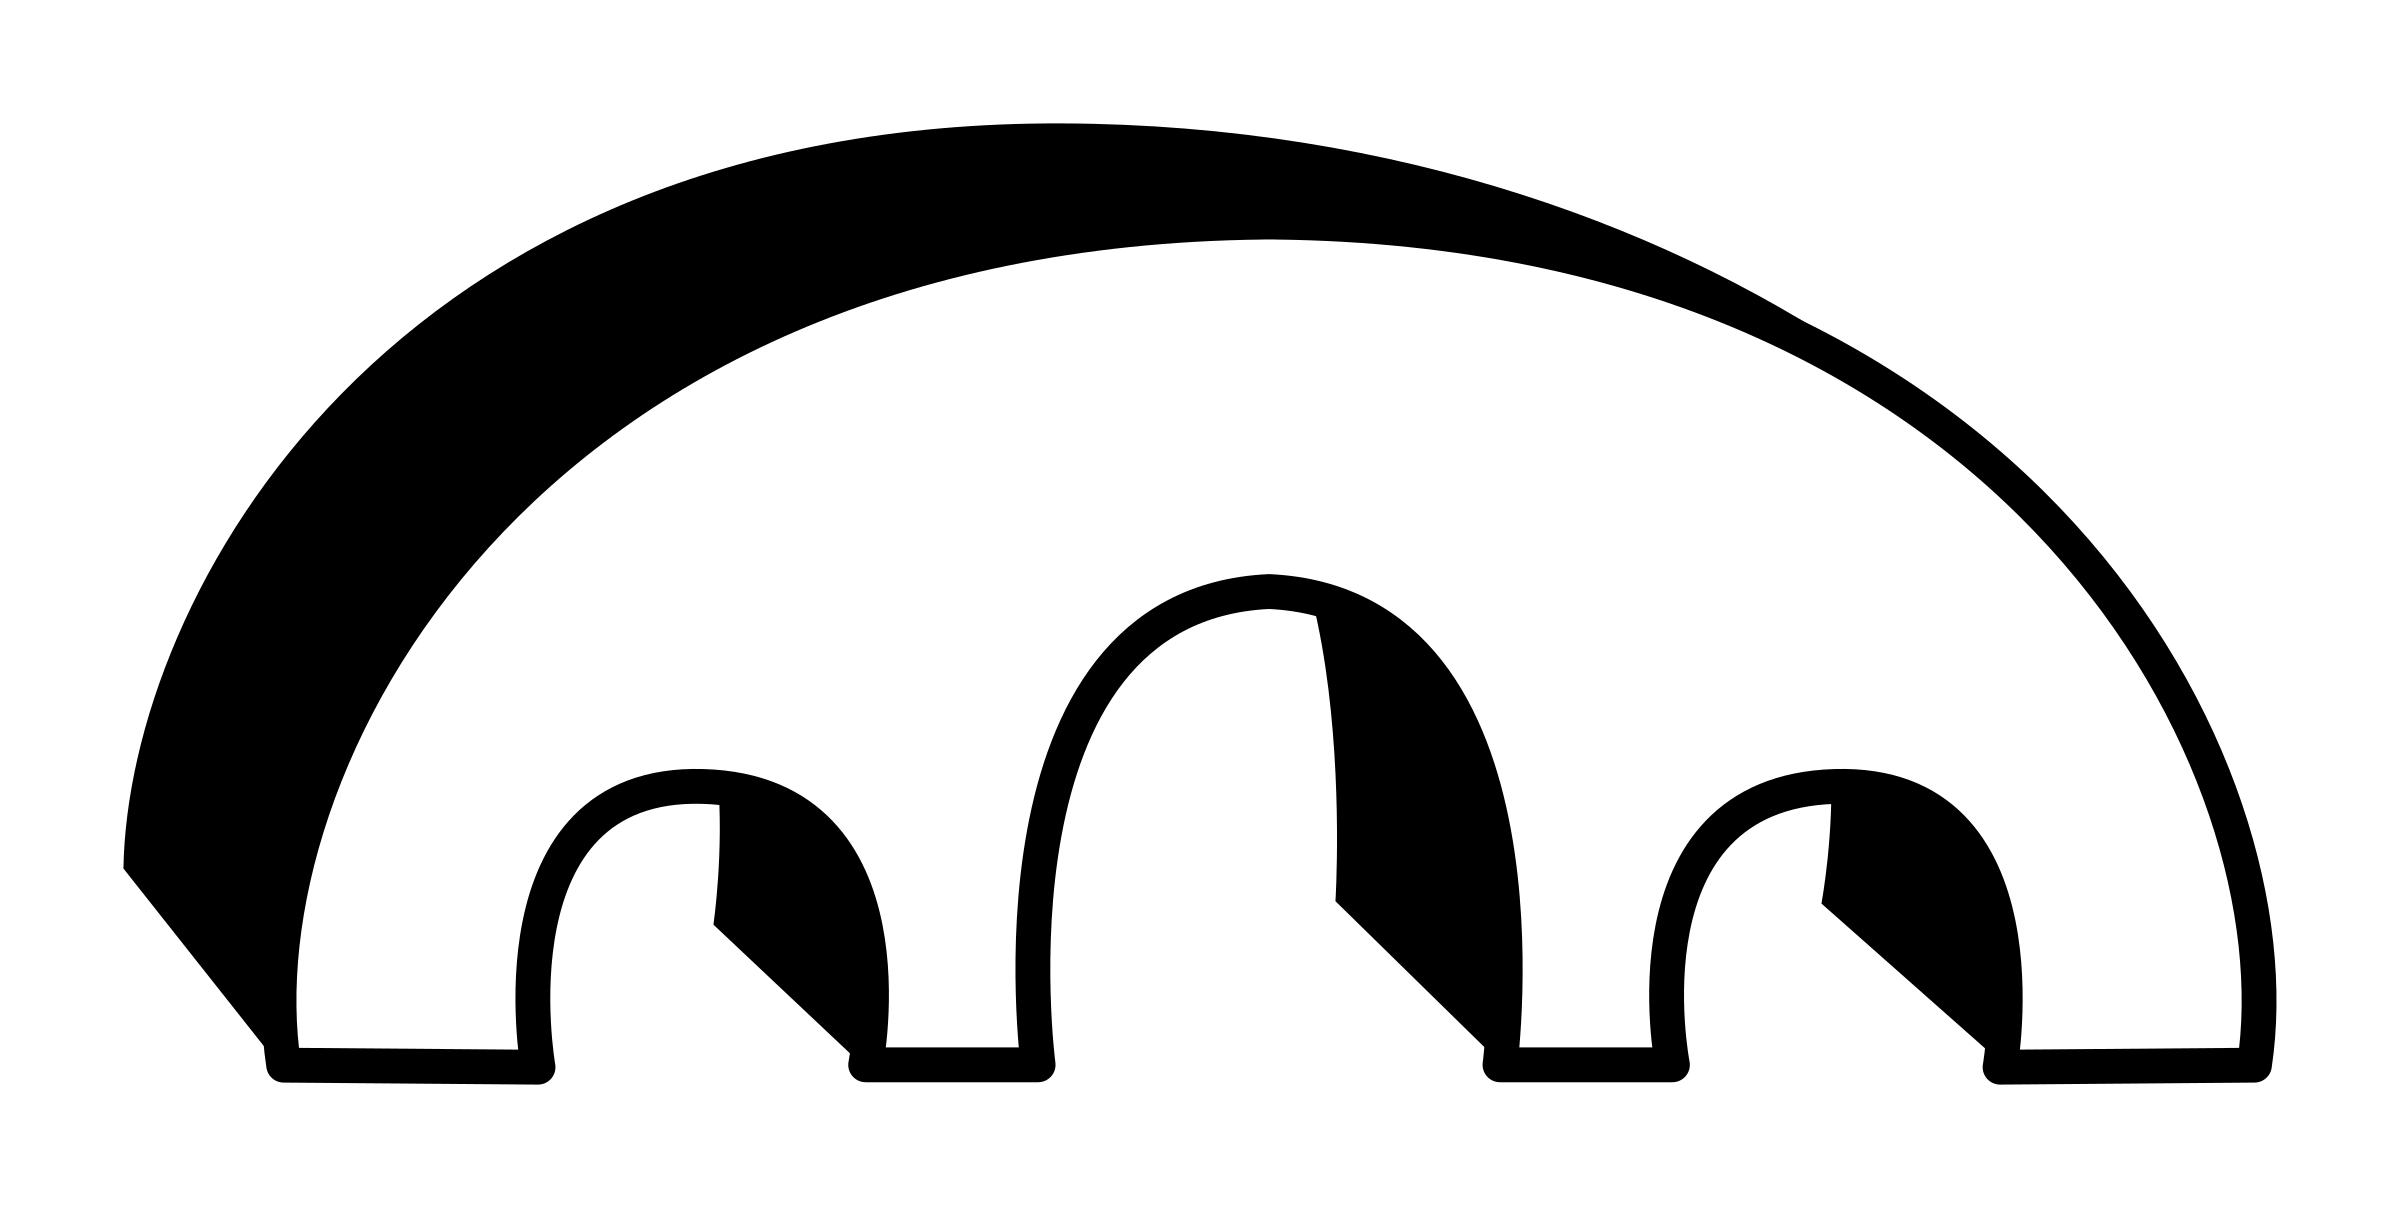 Simple d in big. Bridge clipart black and white